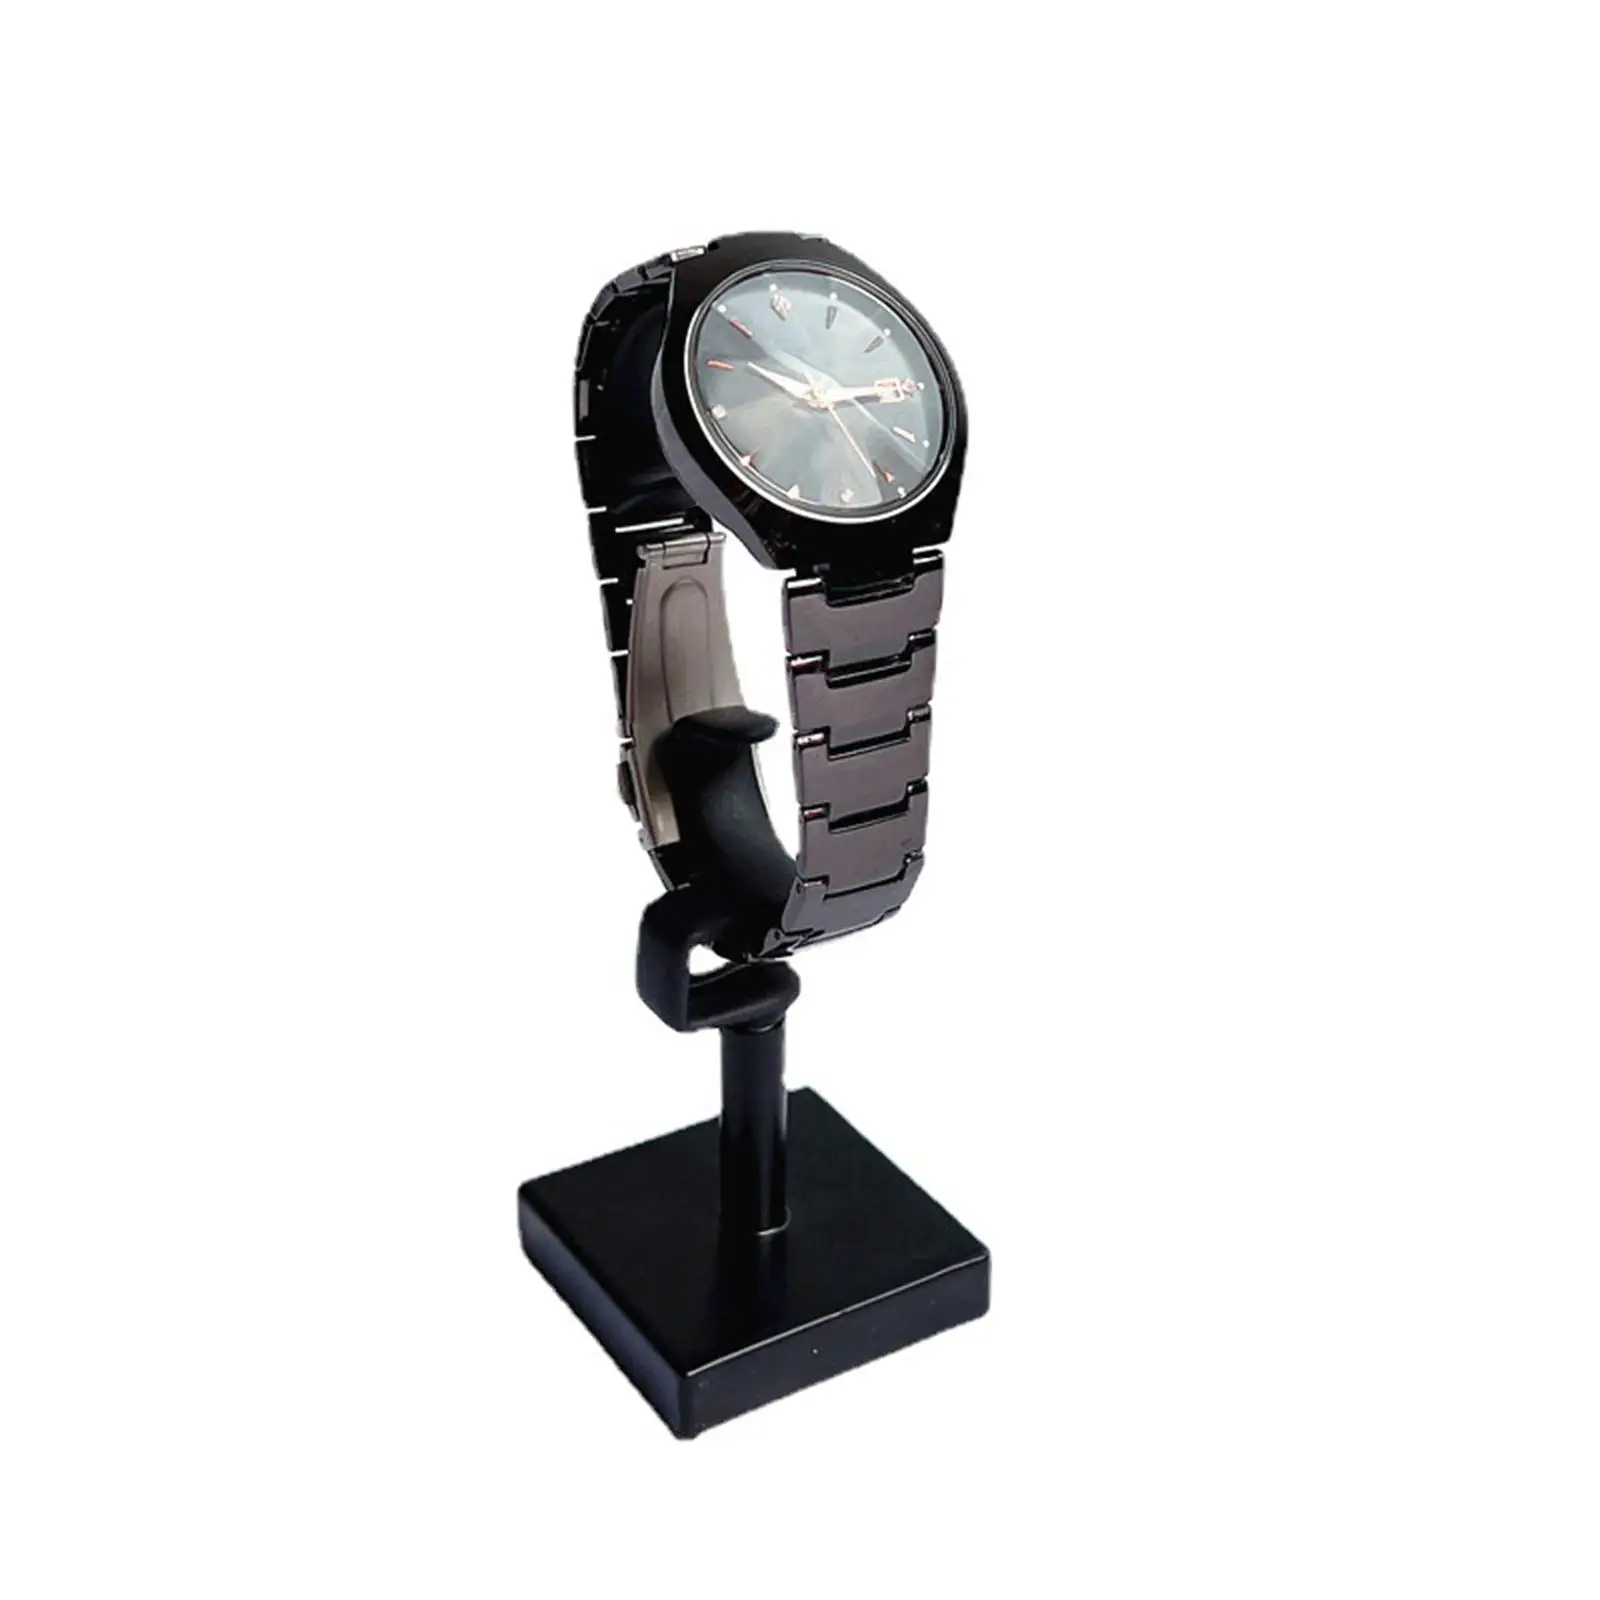 Durable Watch Display Stand Home Decor black Freestanding Gift Multipurpose Stable Bracelet Holder for Desktop Showcase